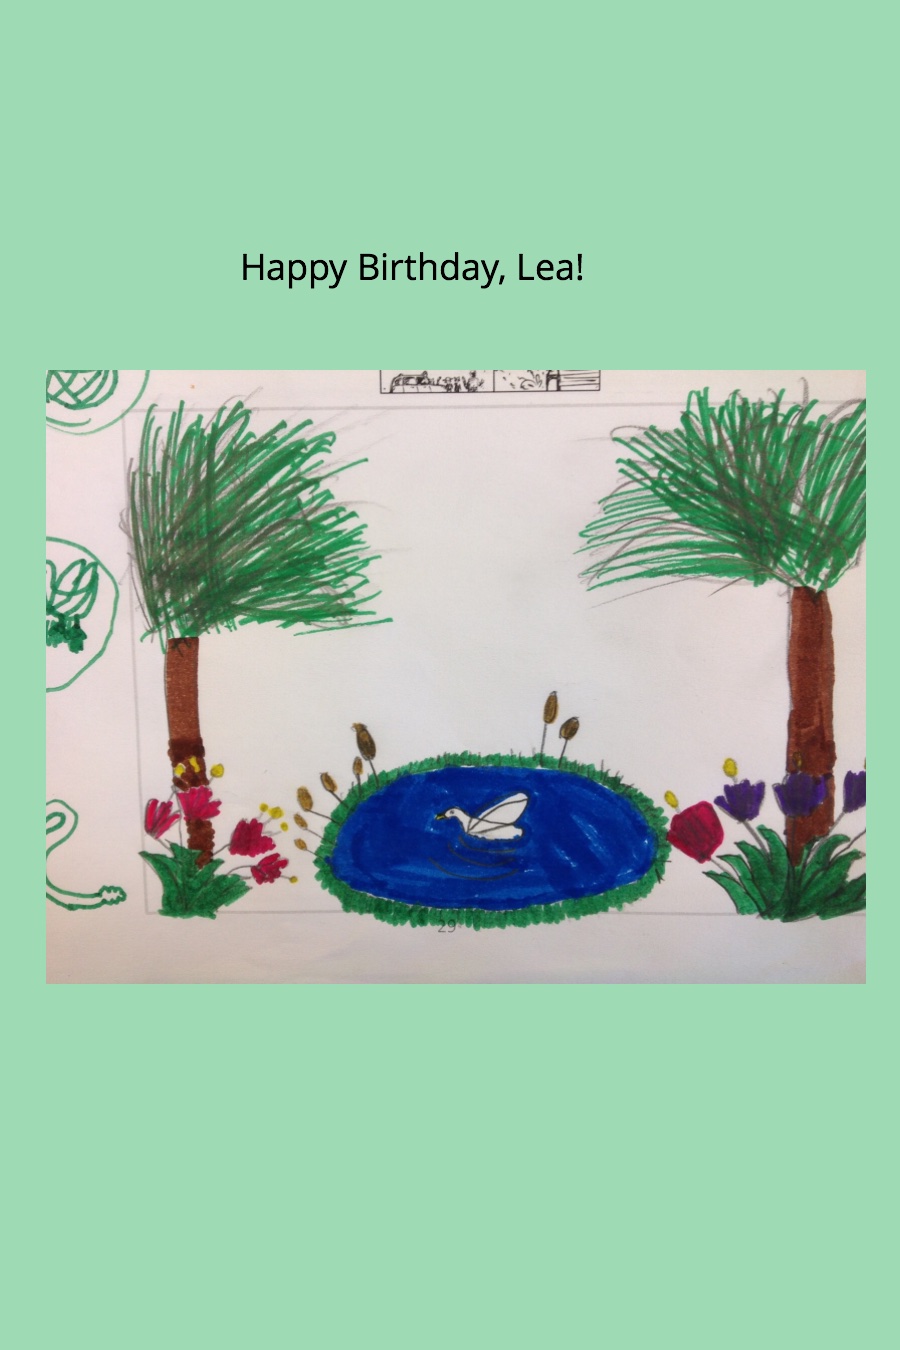 Happy Birthday Lea! by Ellie E